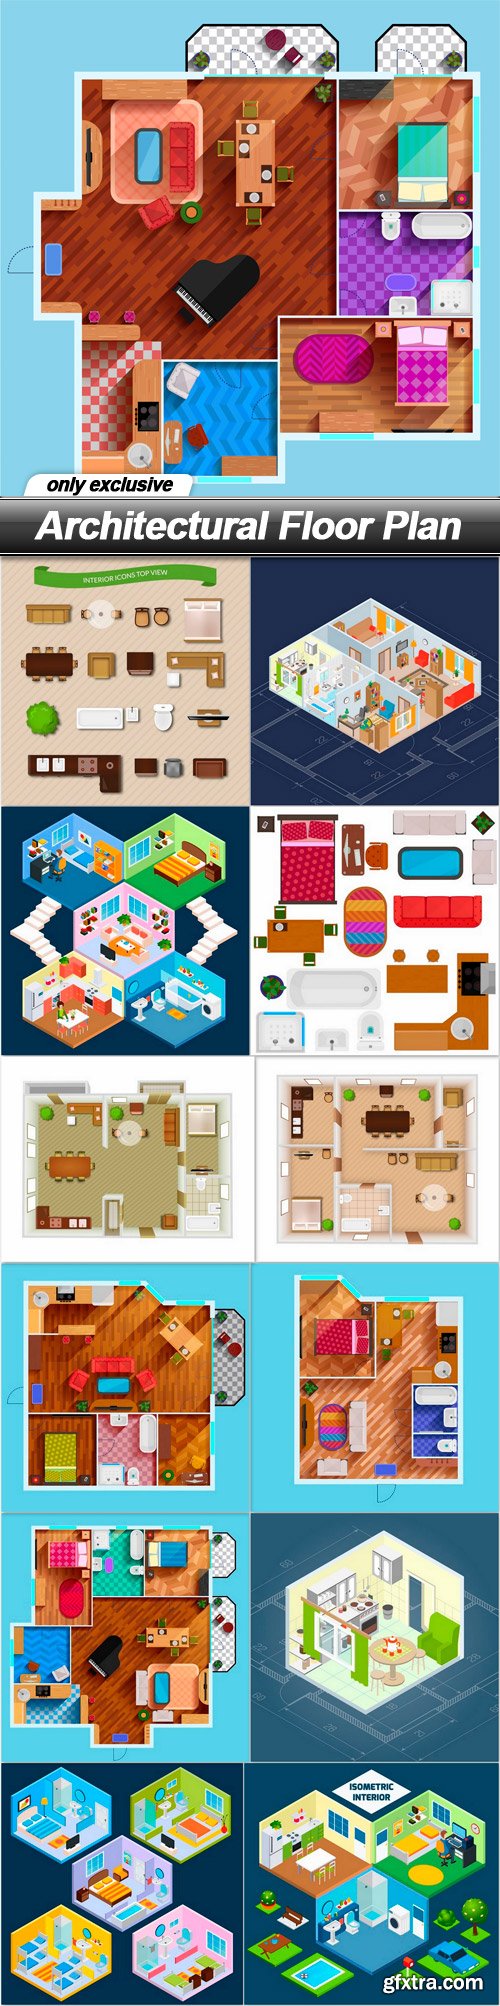 Architectural Floor Plan - 13 EPS